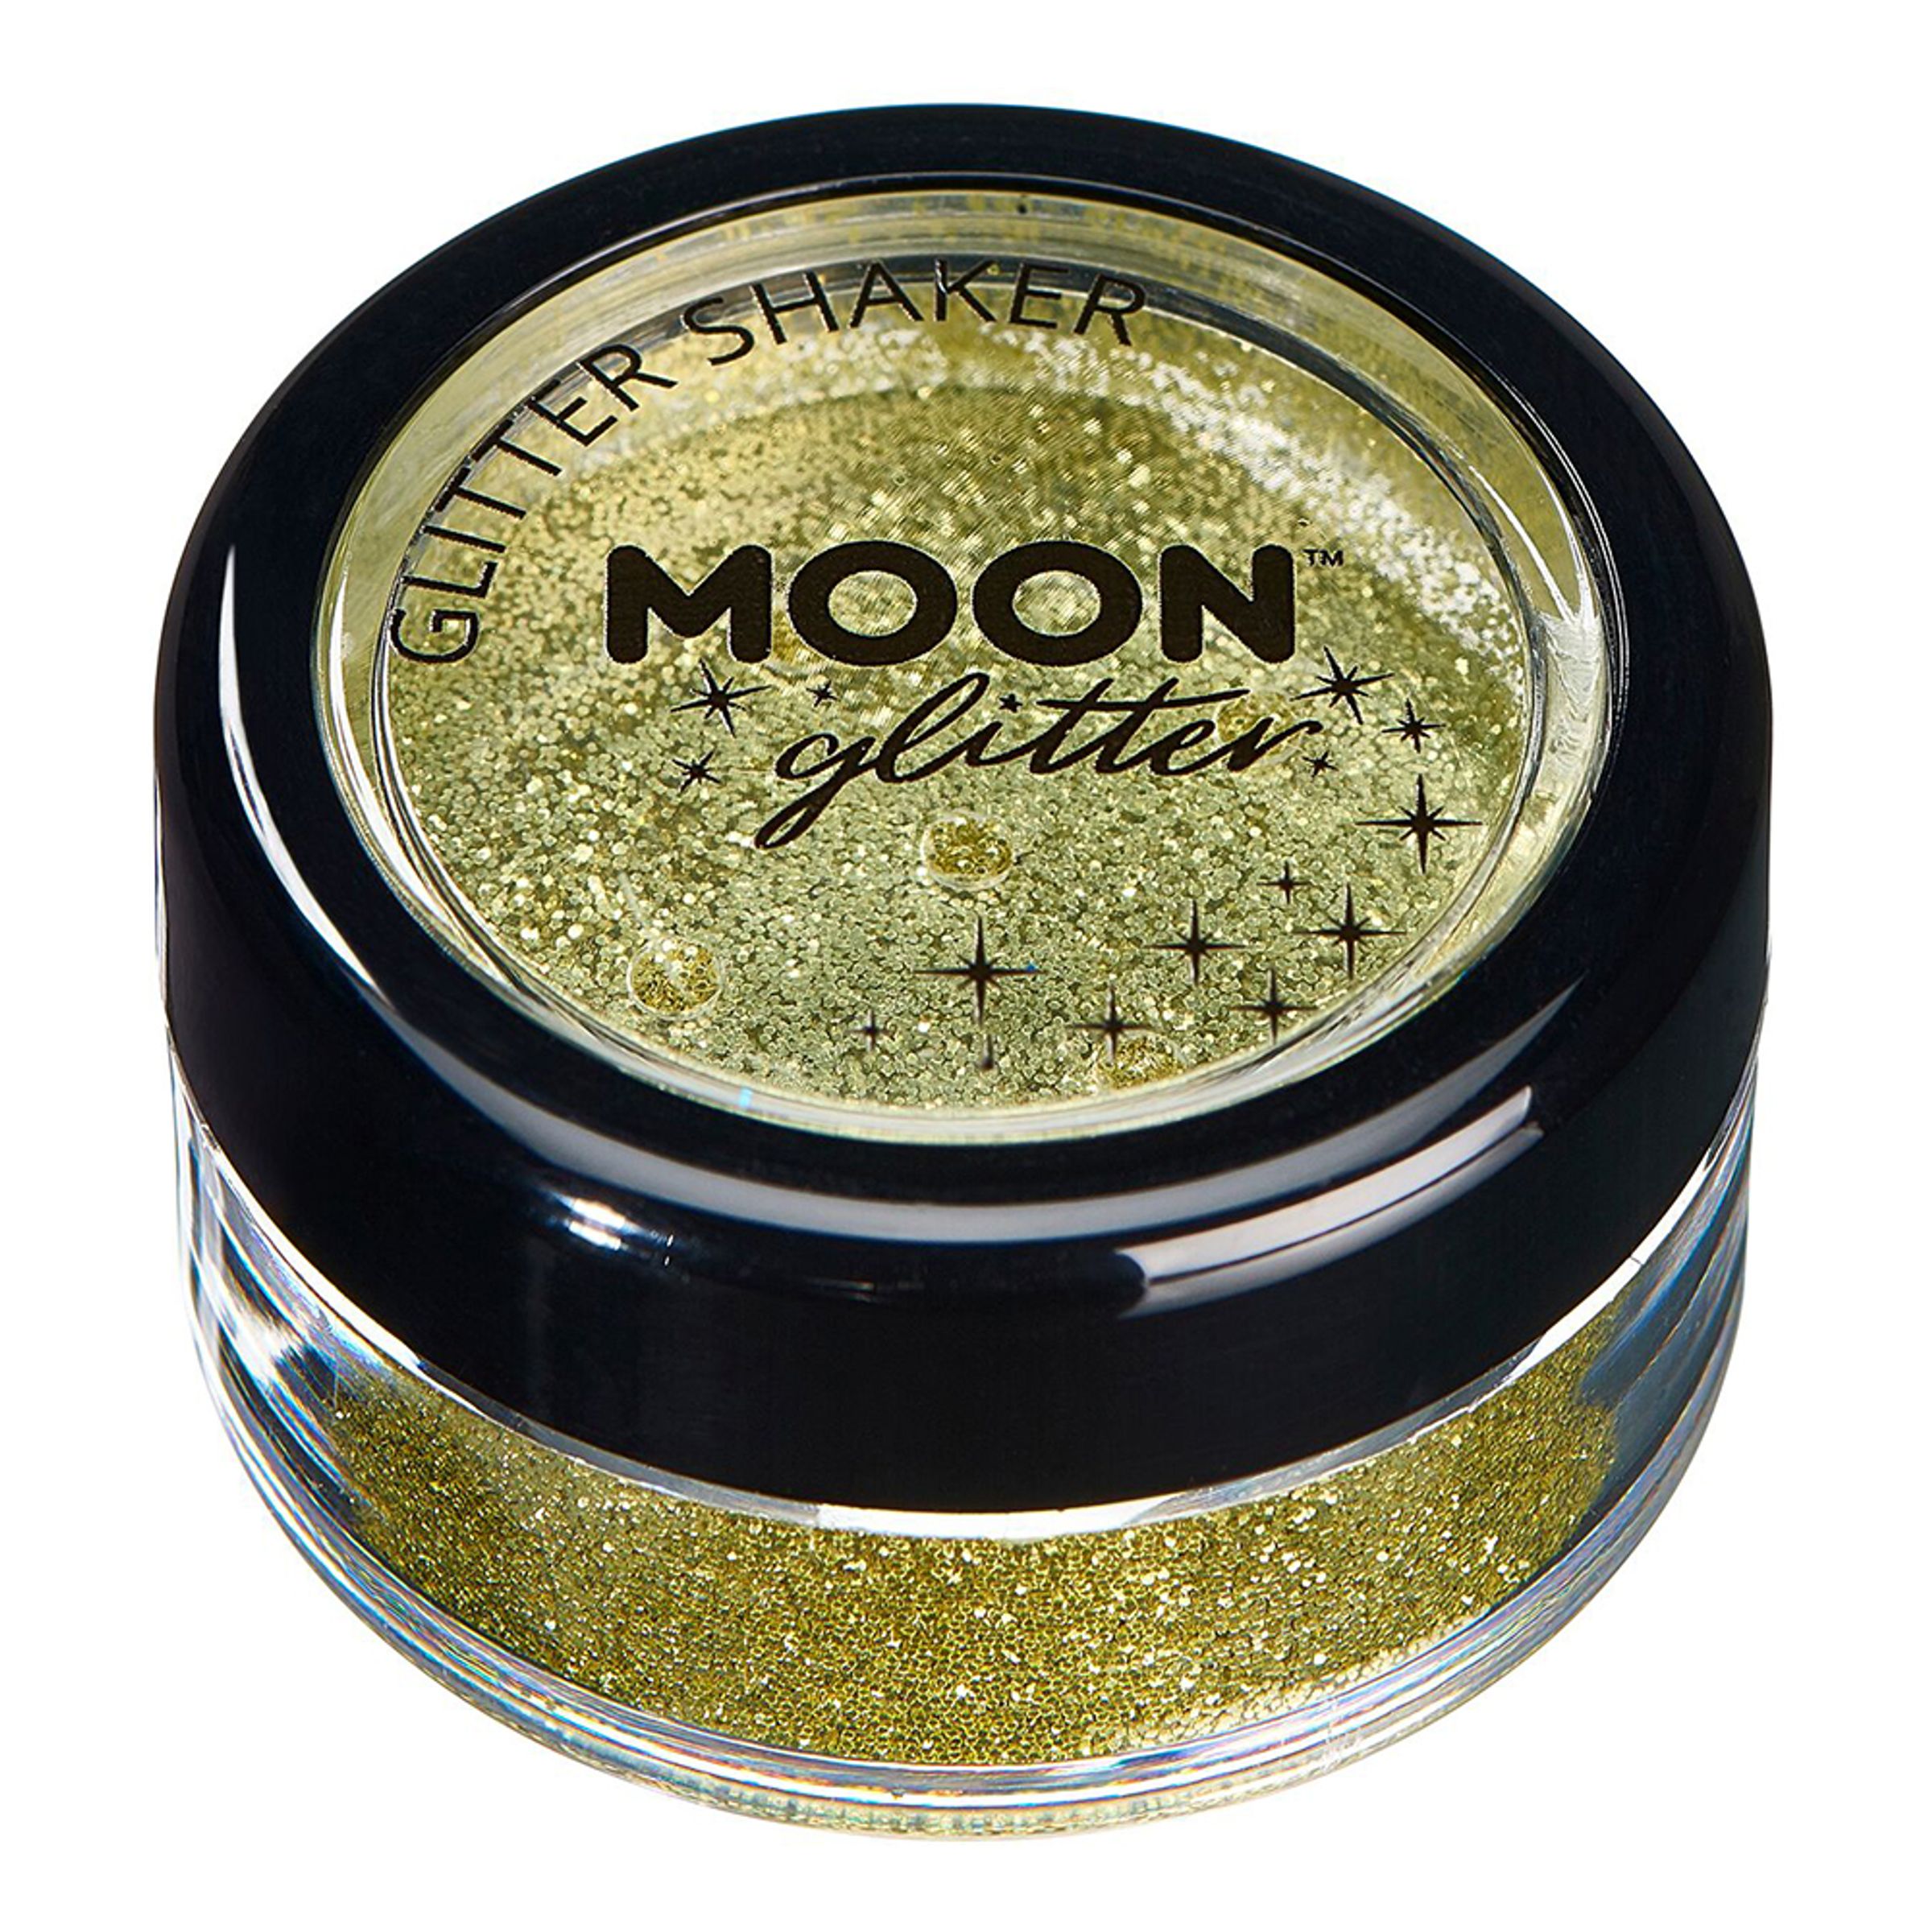 Moon Creations Classic Fine Glitter Shakers - Guld